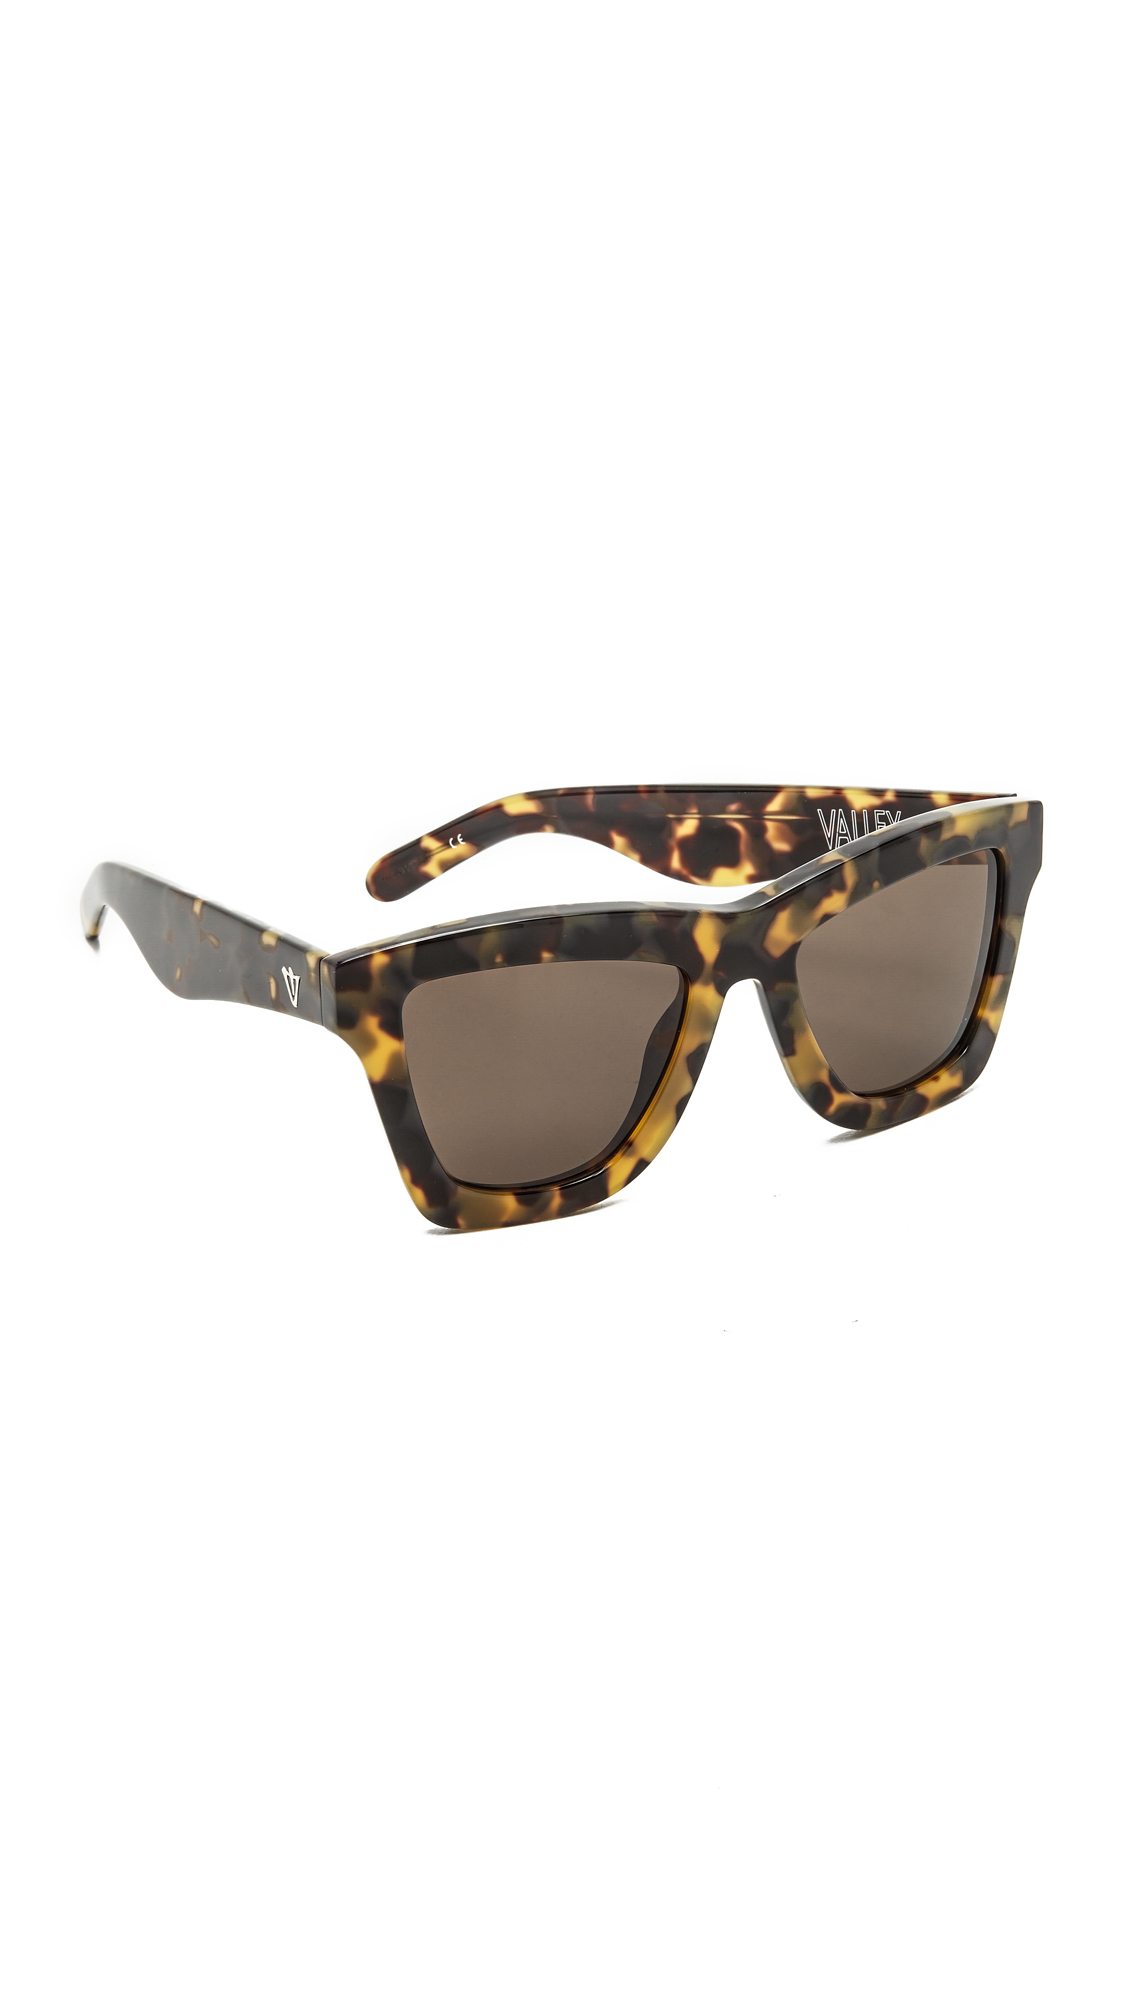 Lyst - Valley eyewear Db Sunglasses in Brown